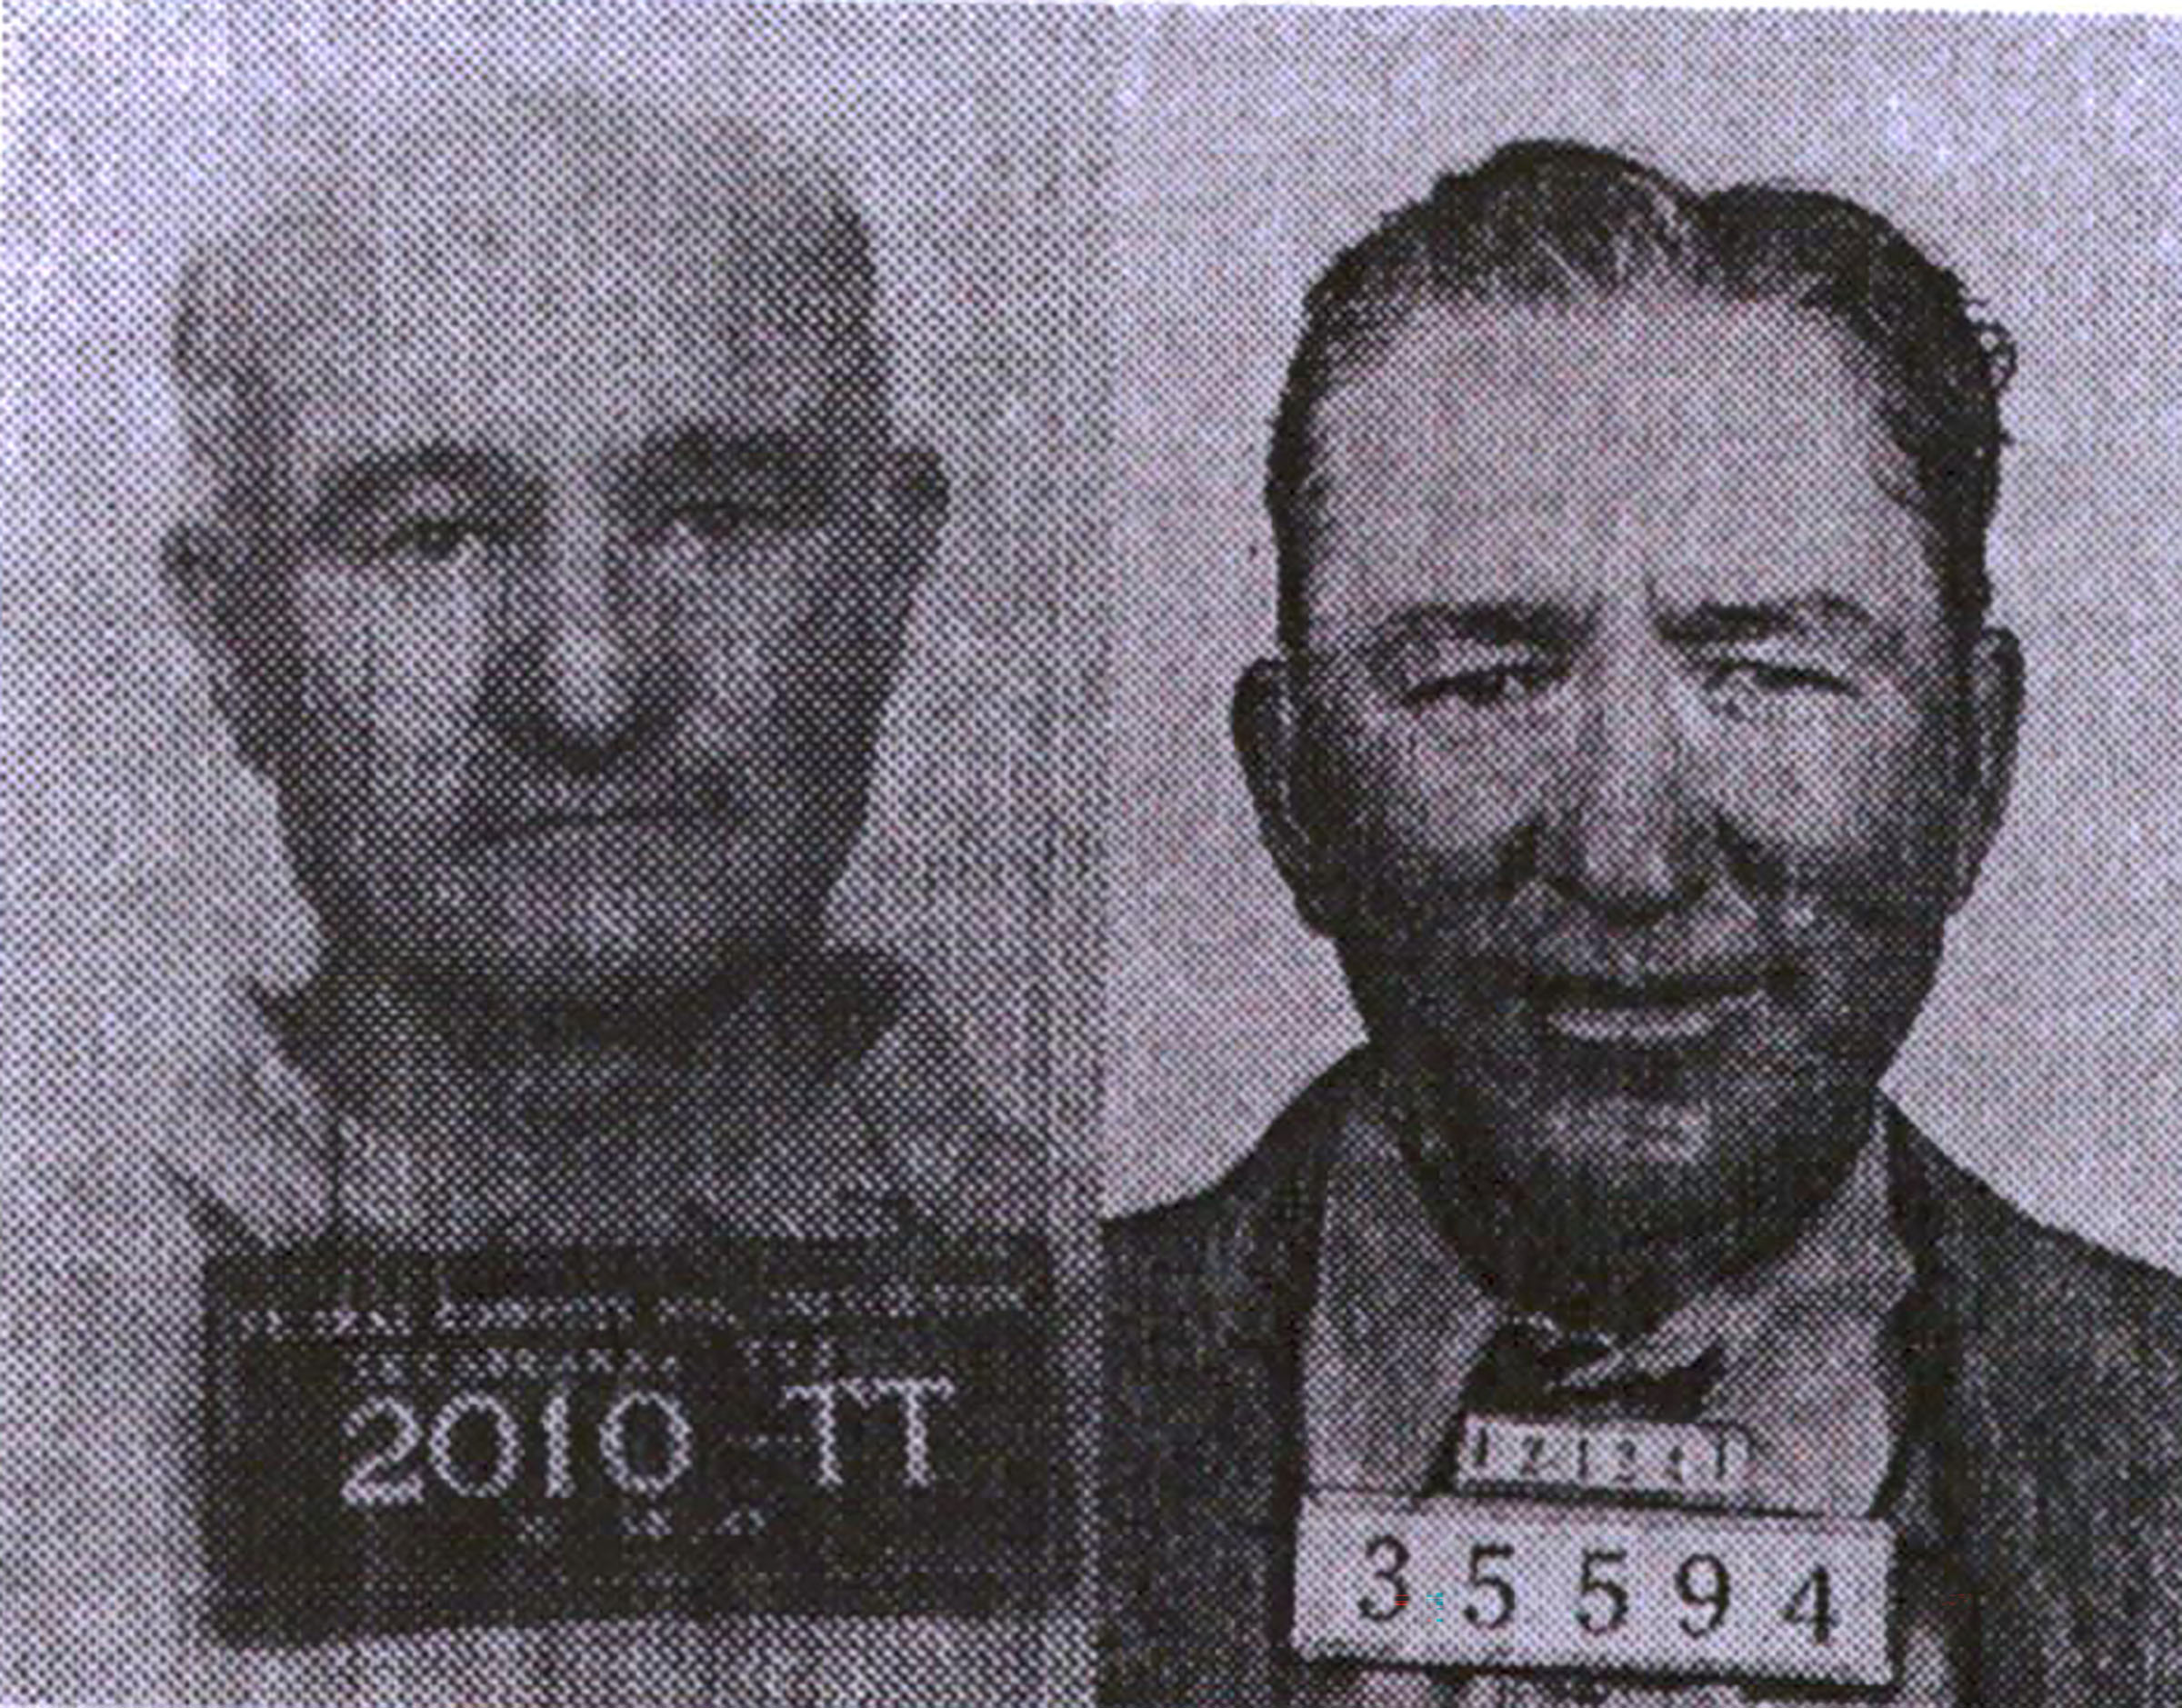 Mugshots of two men